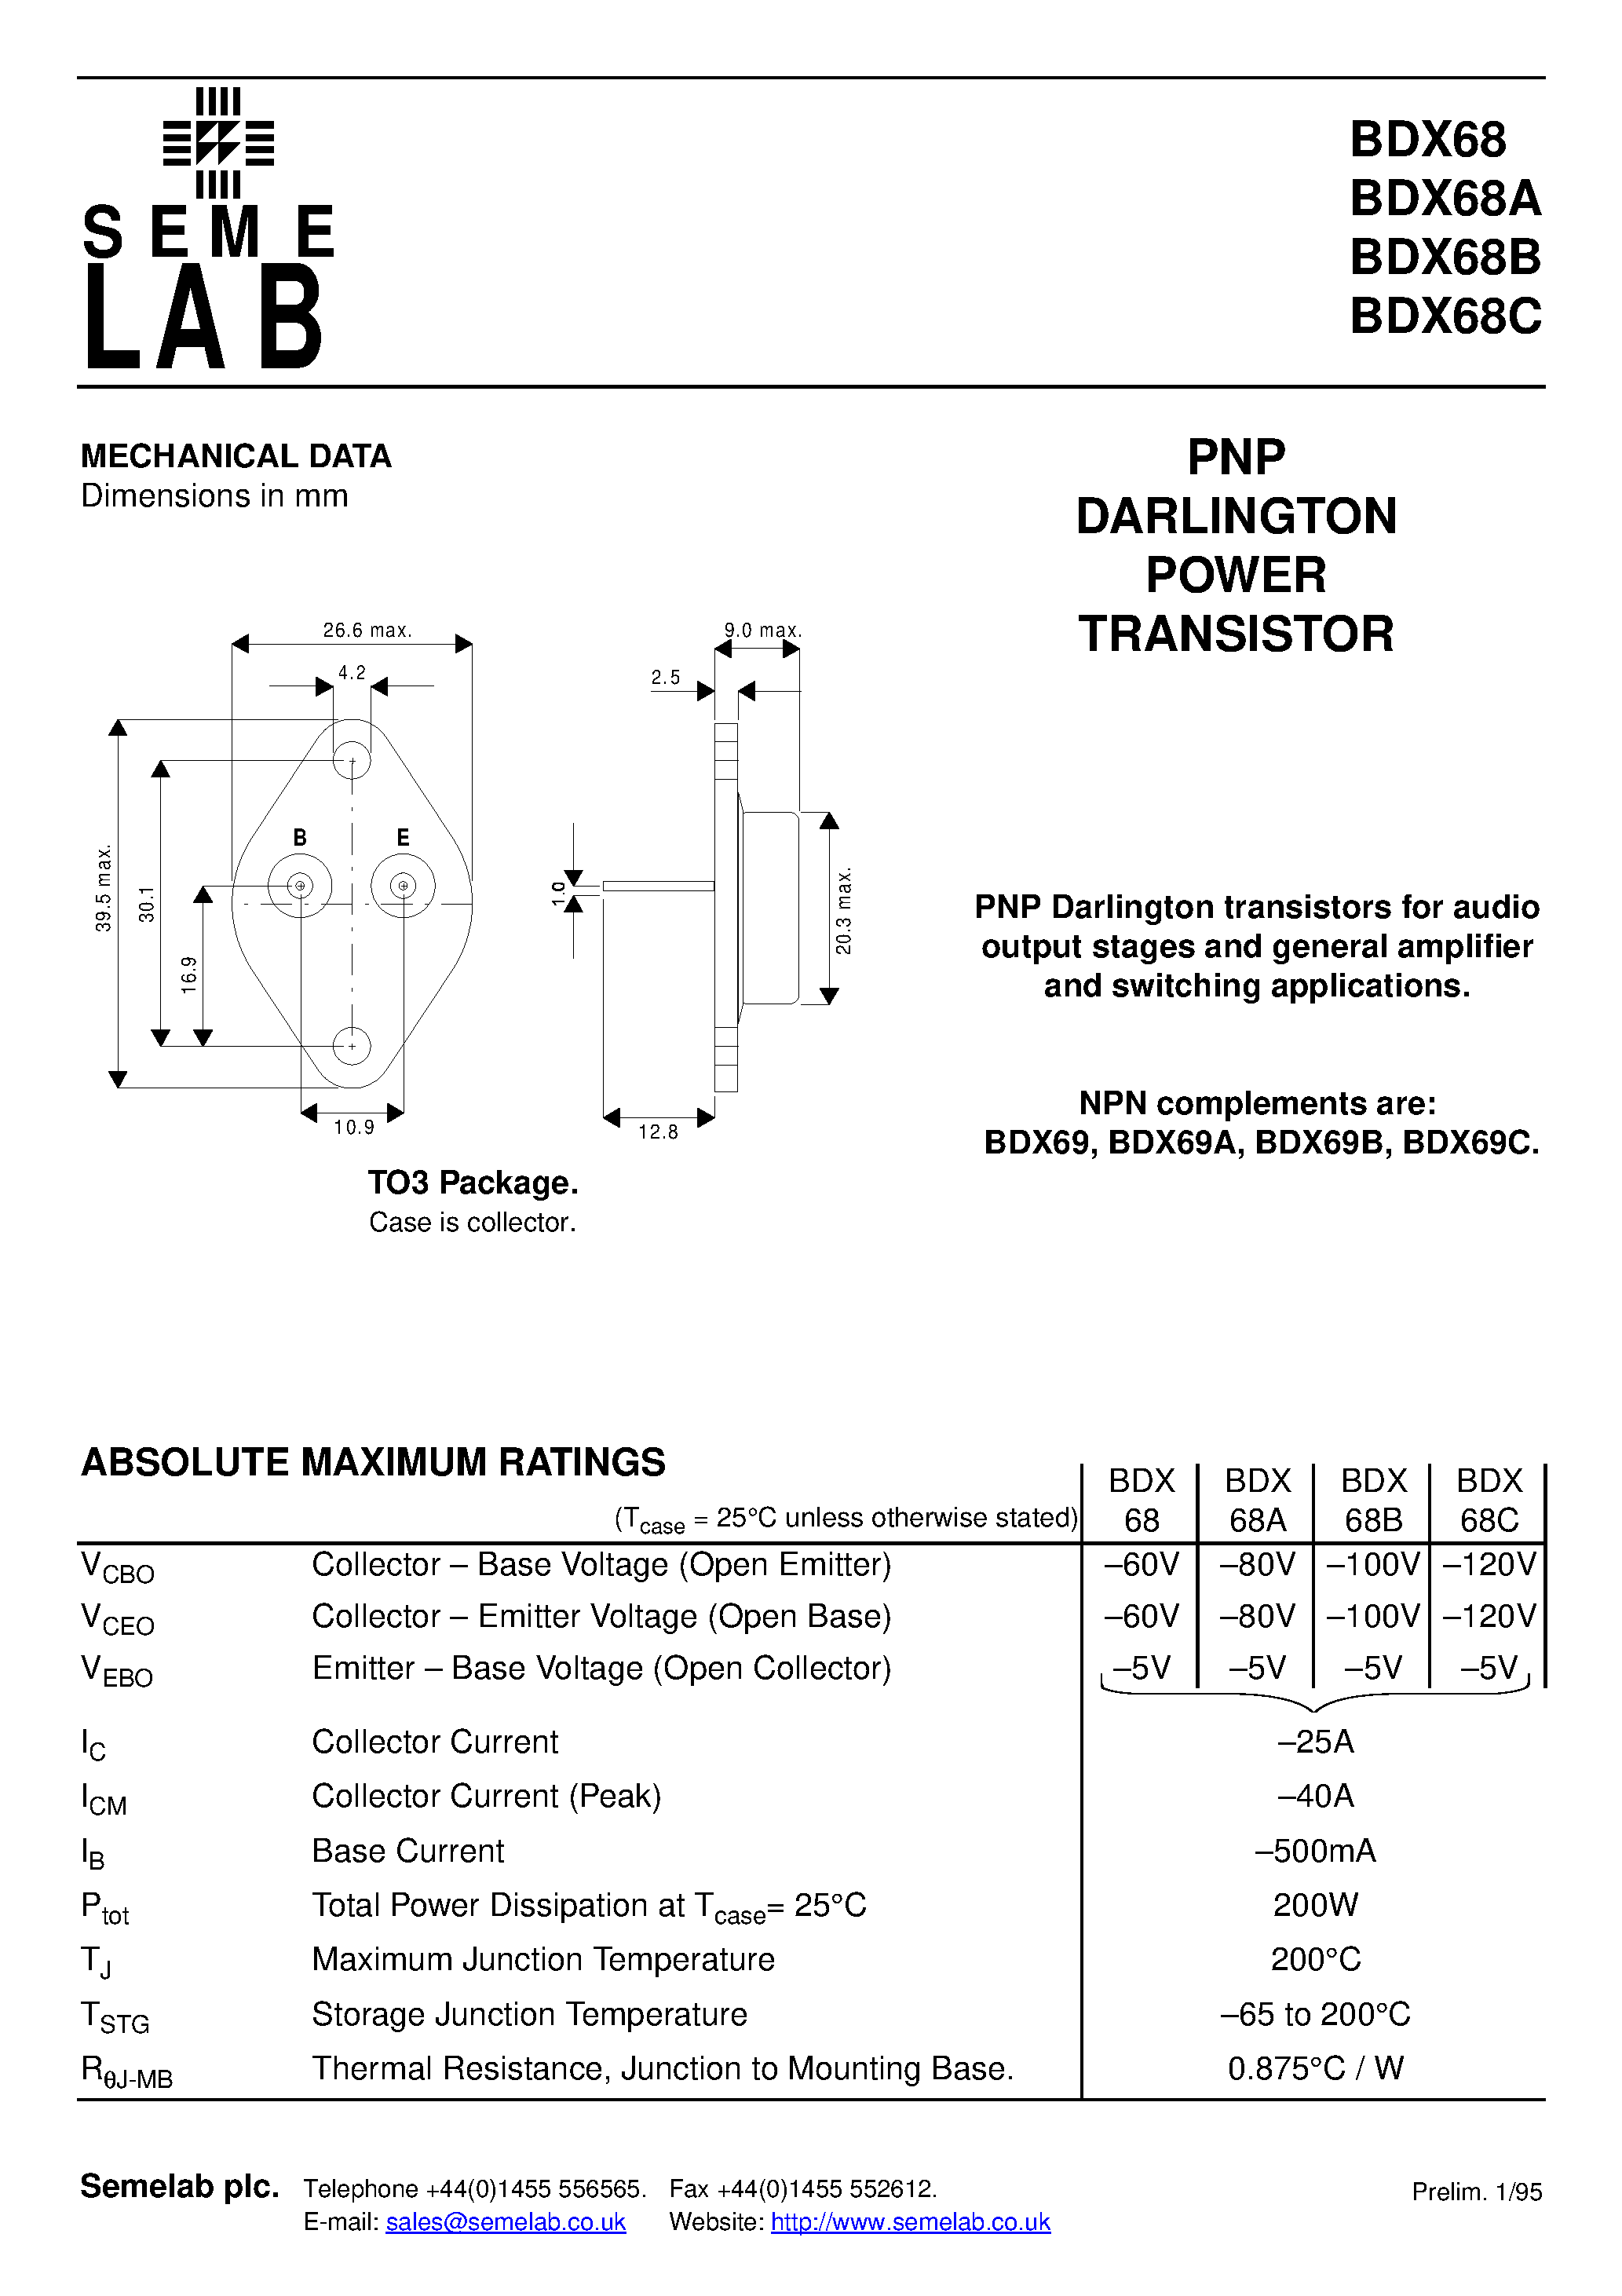 Datasheet BDX68A - PNP DARLINGTON POWER TRANSISTOR page 1